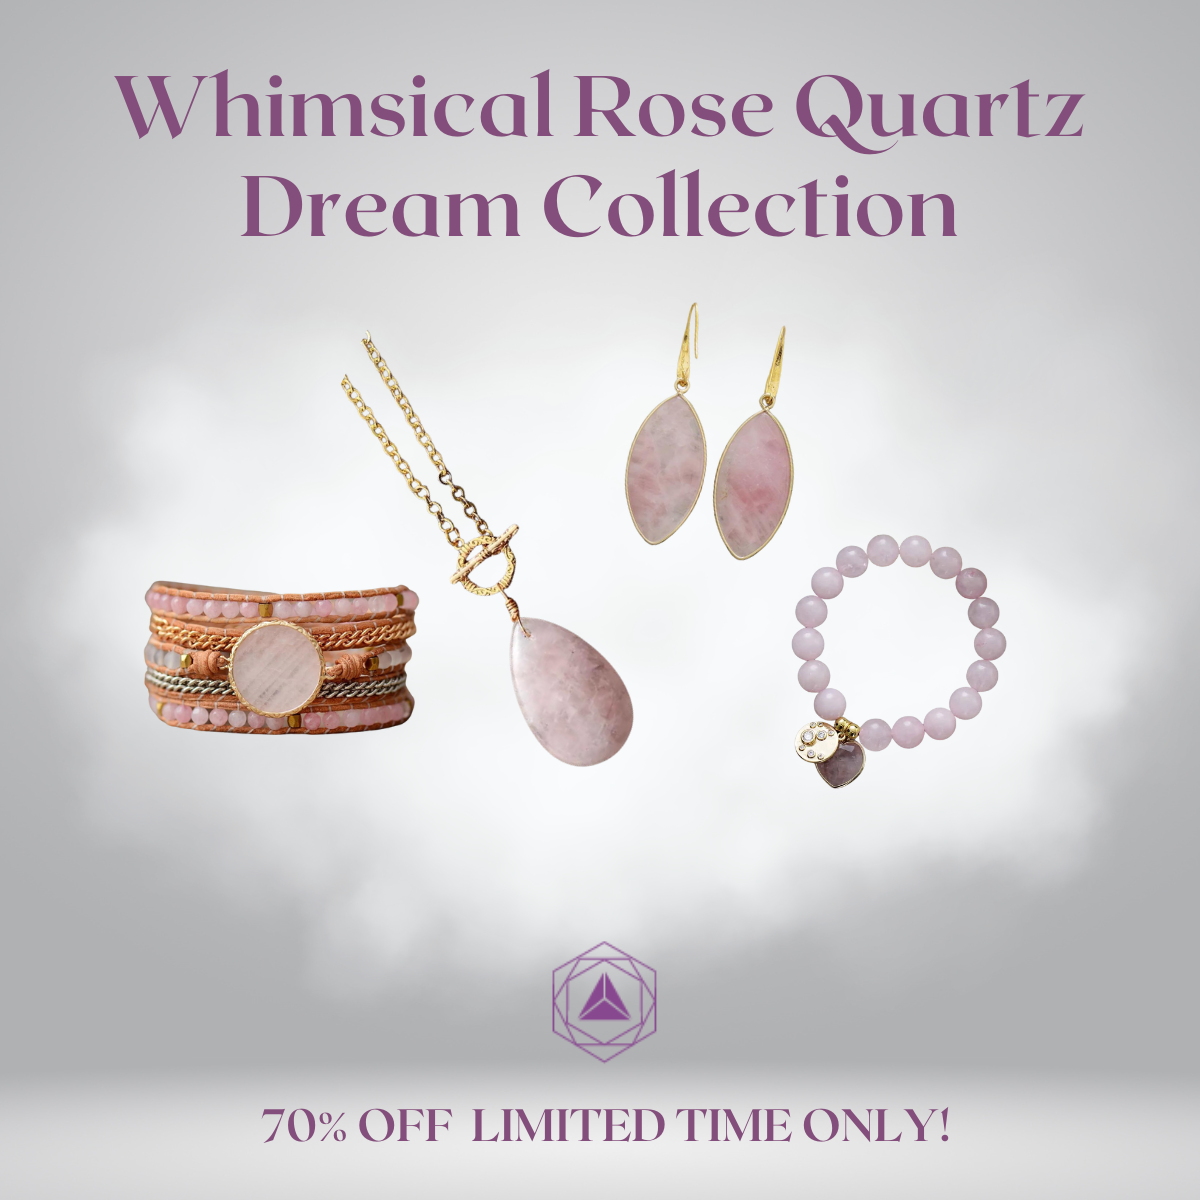 Whimsical Rose Quartz Dream Collection